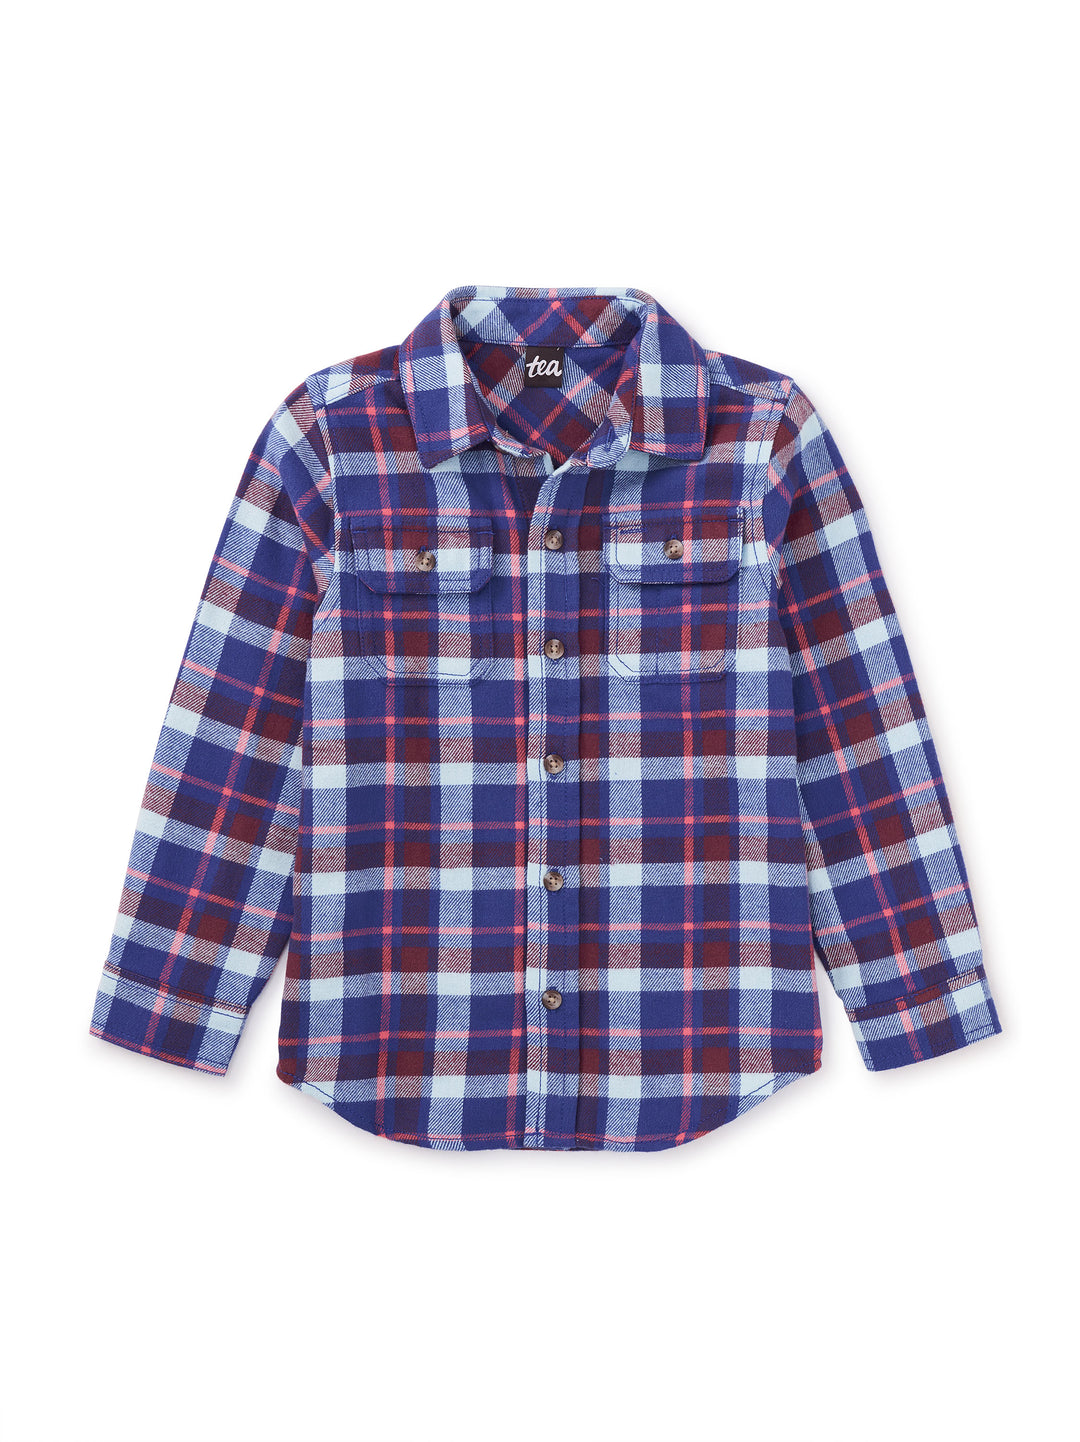 Tea Collection Flannel Button Up Shirt, Magique Plaid |Mockingbird Baby & Kids